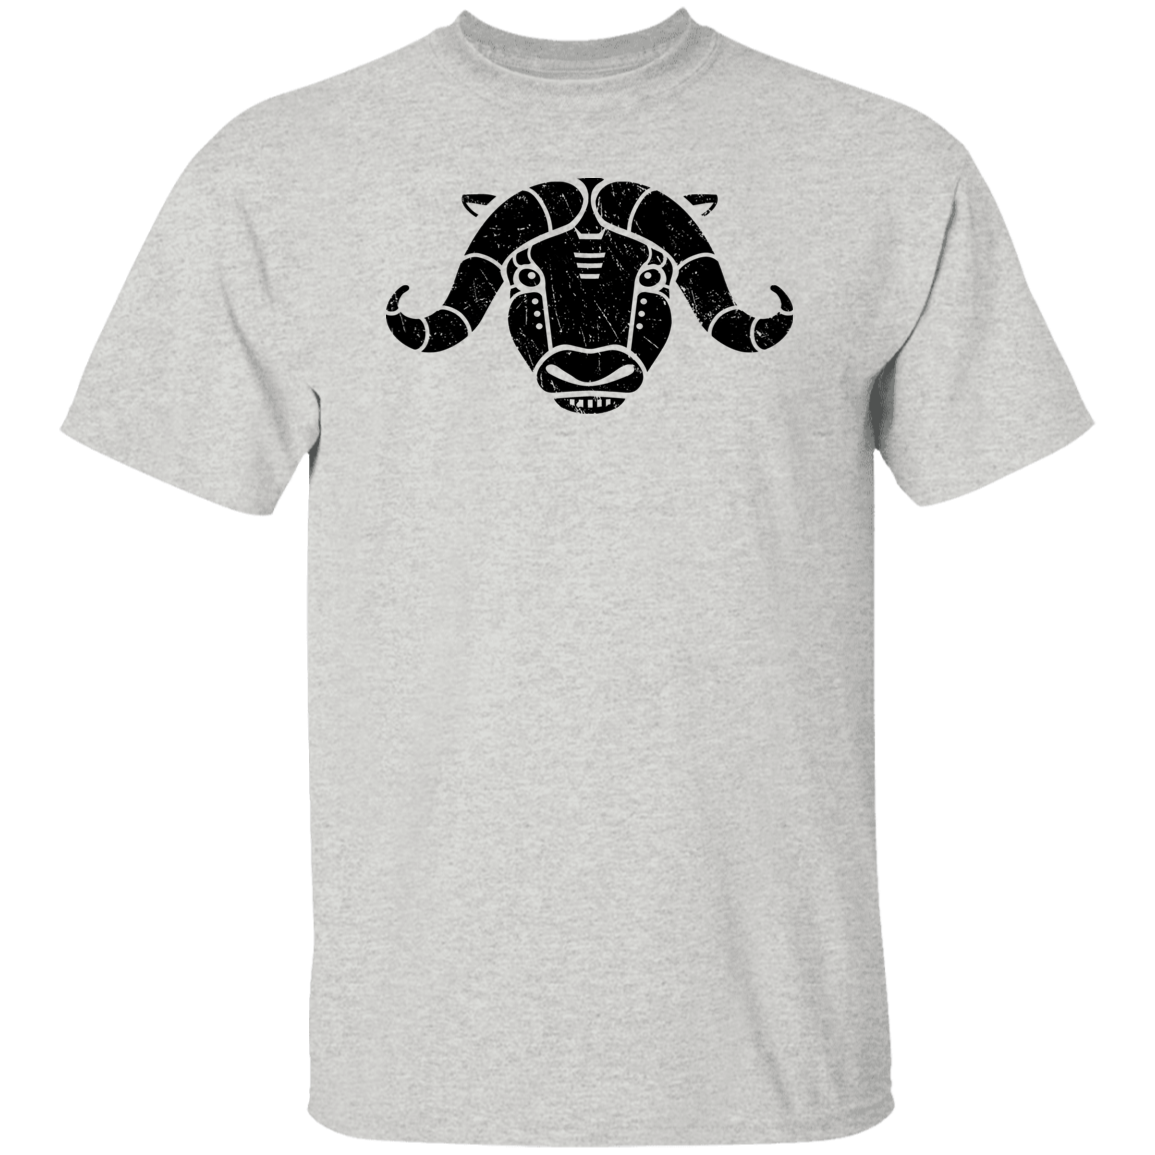 Black Distressed Emblem T-Shirt for Kids (Musk Ox/Moxie)